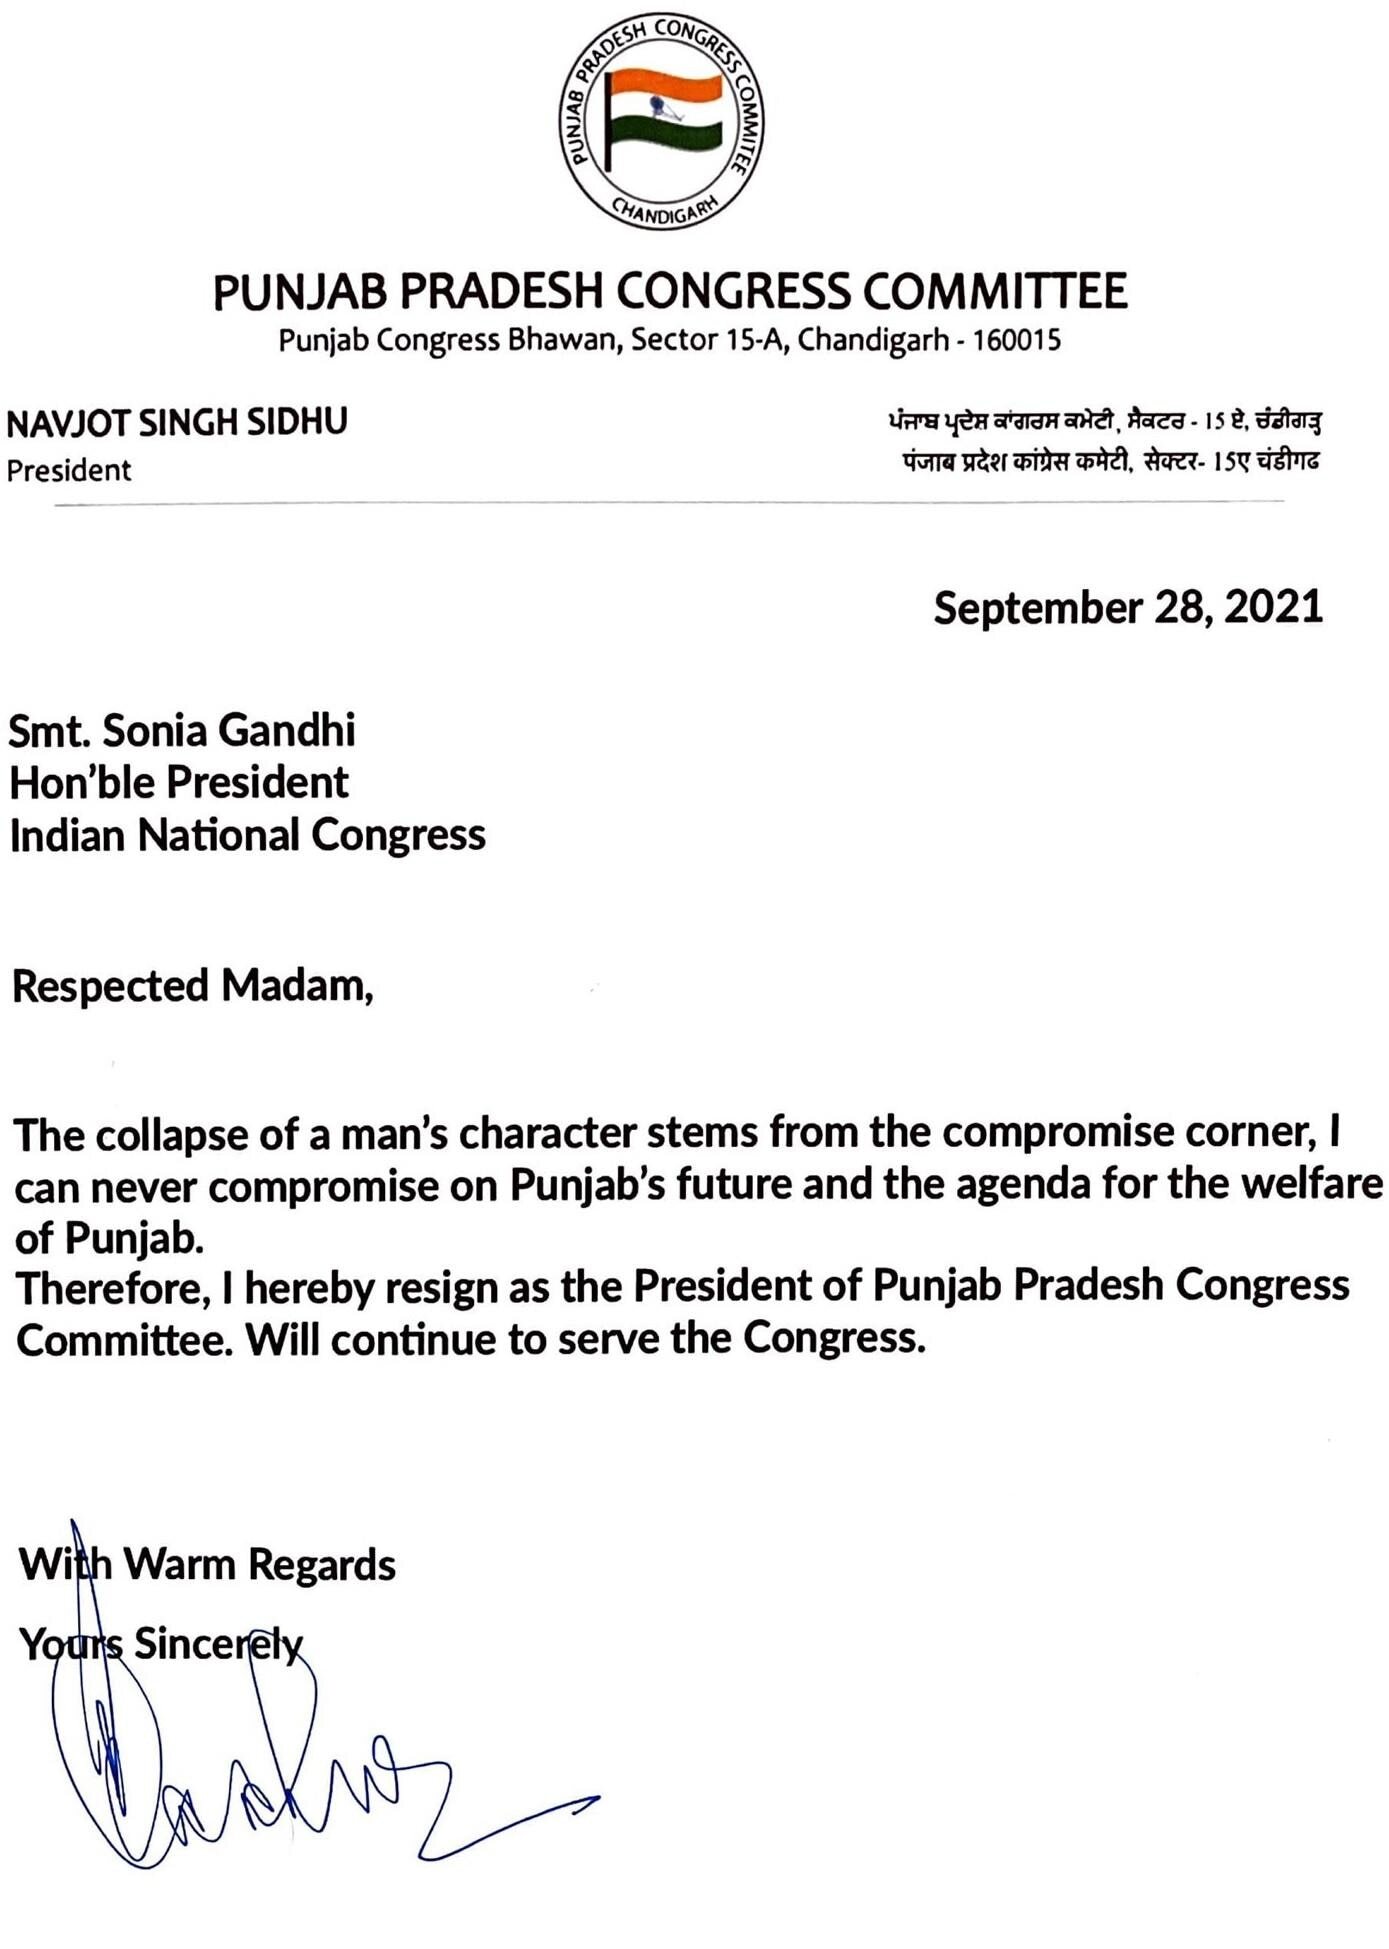 Navjot Singh Sidhu resign